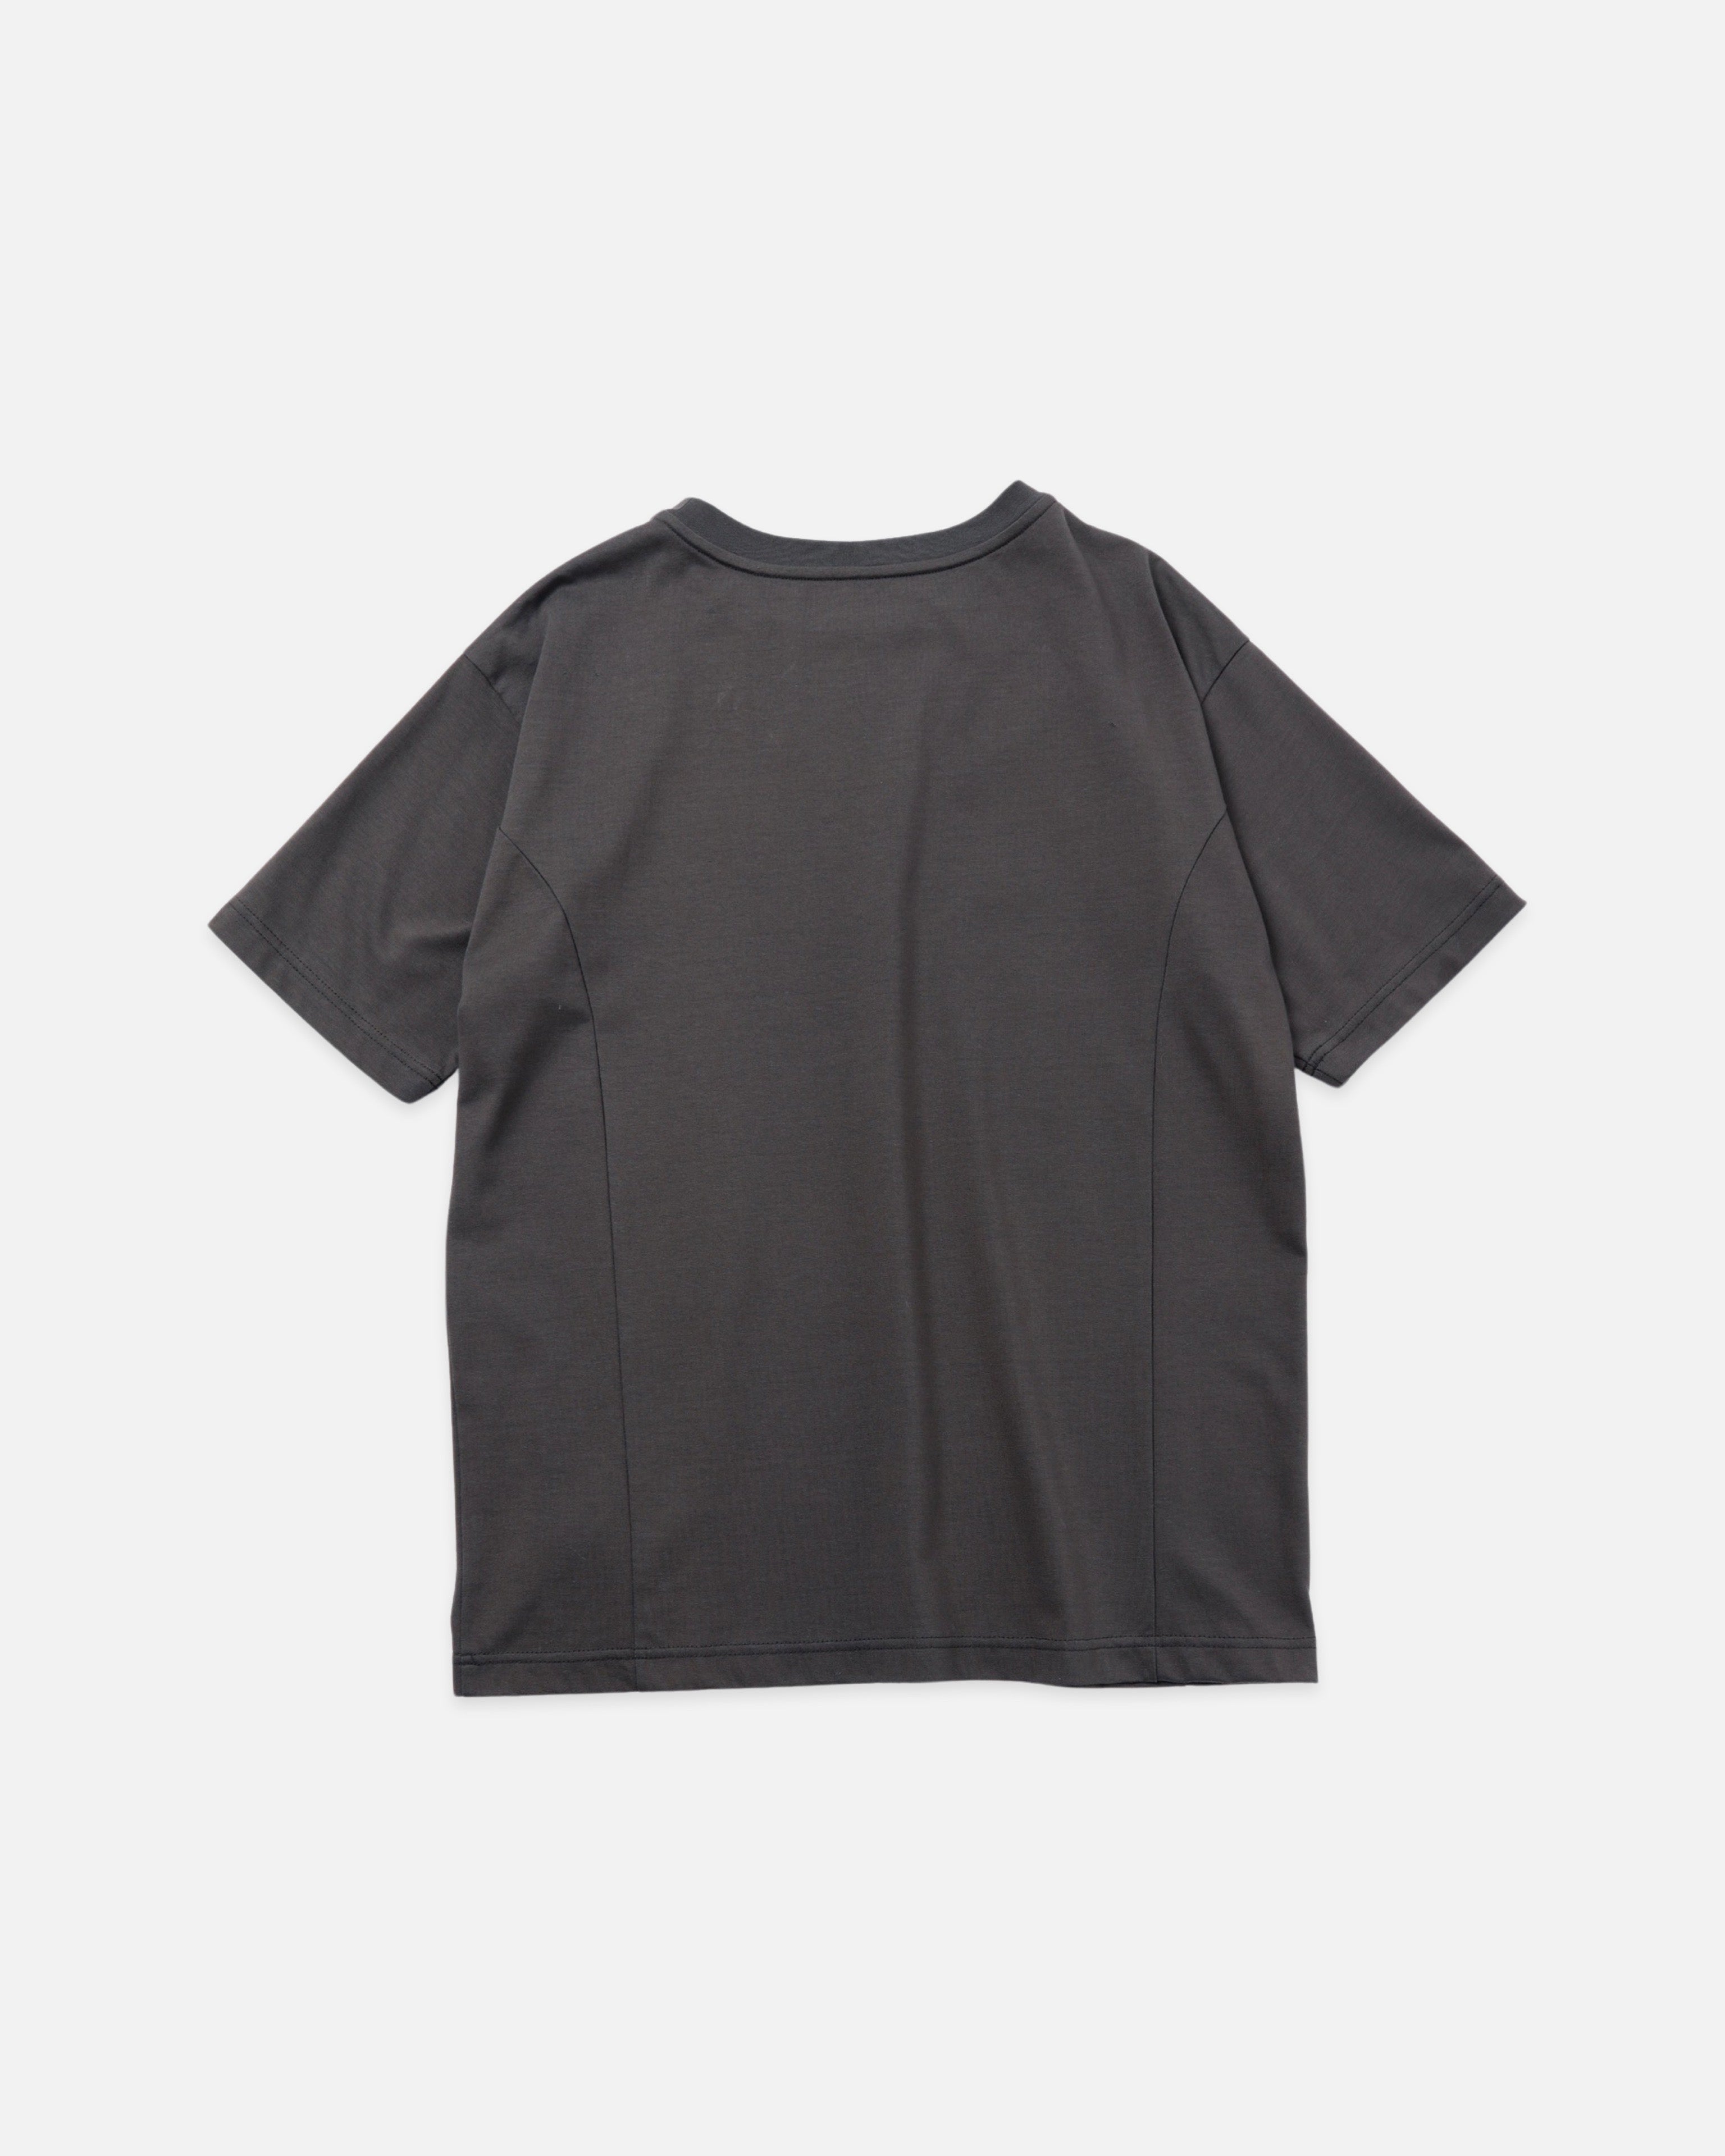 Organic cotton Big T-shirt (charcoal)